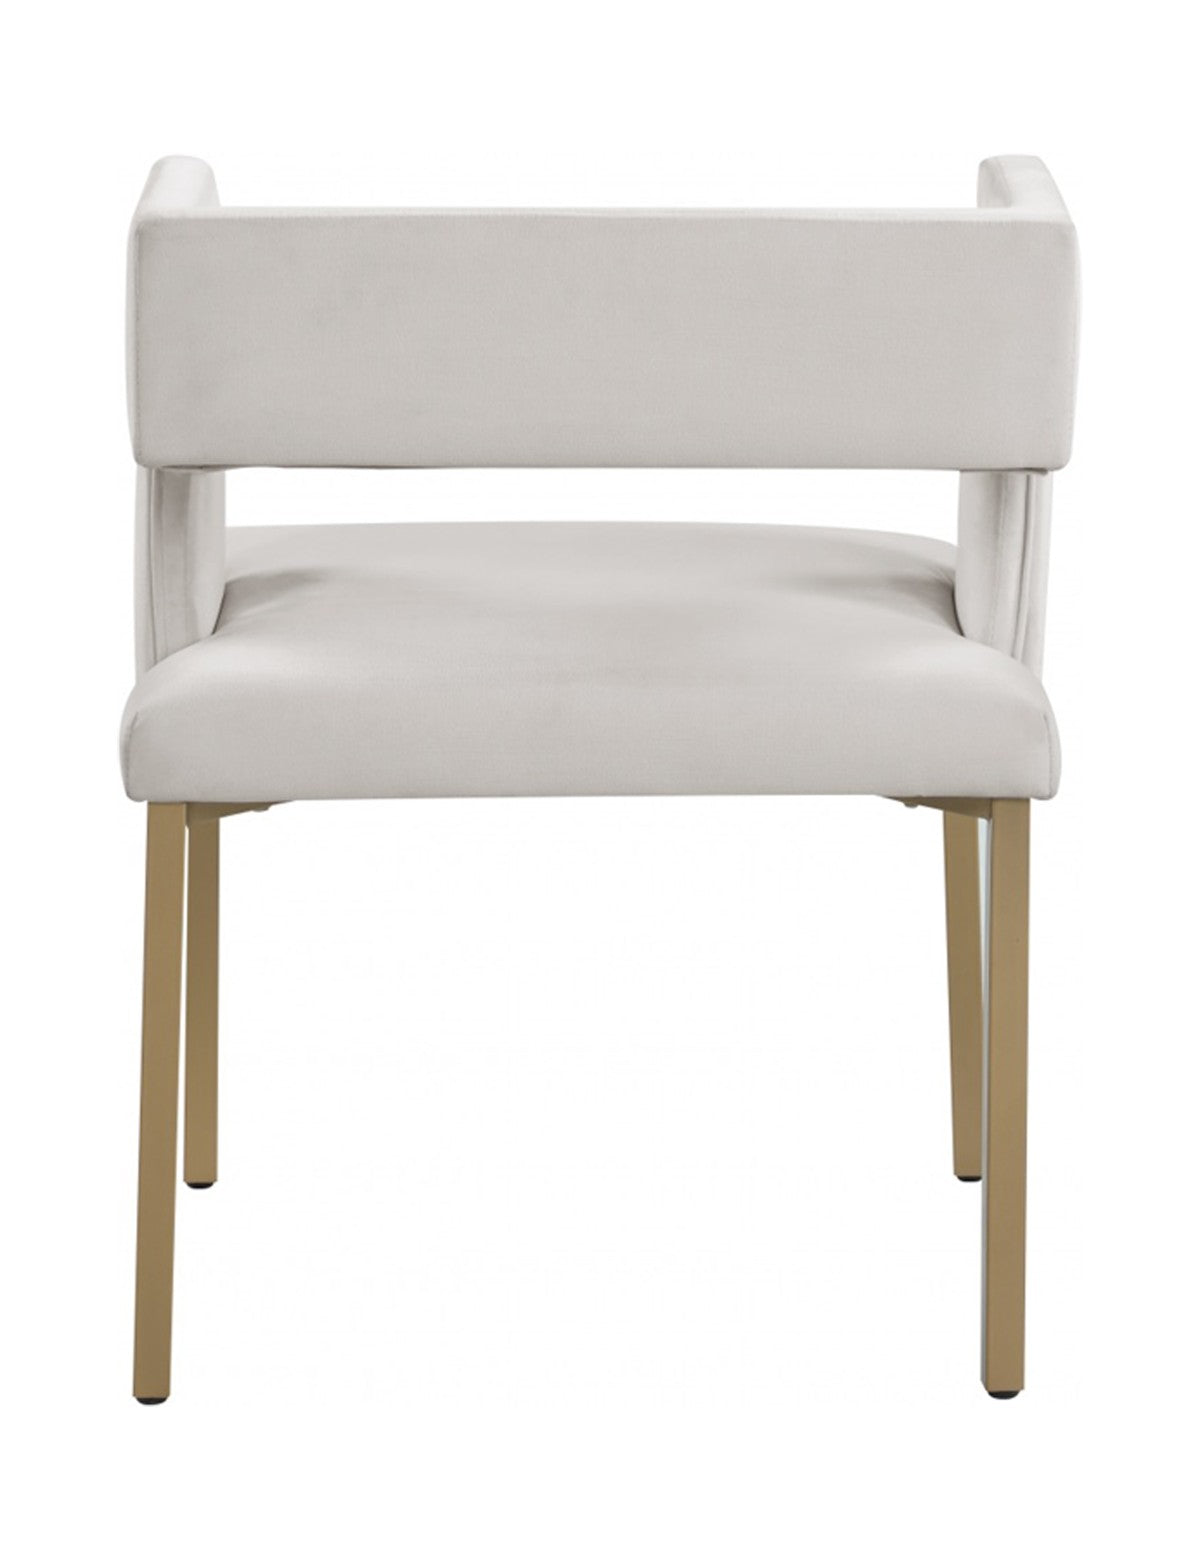 Antha Dining Chair - Gold, Beige